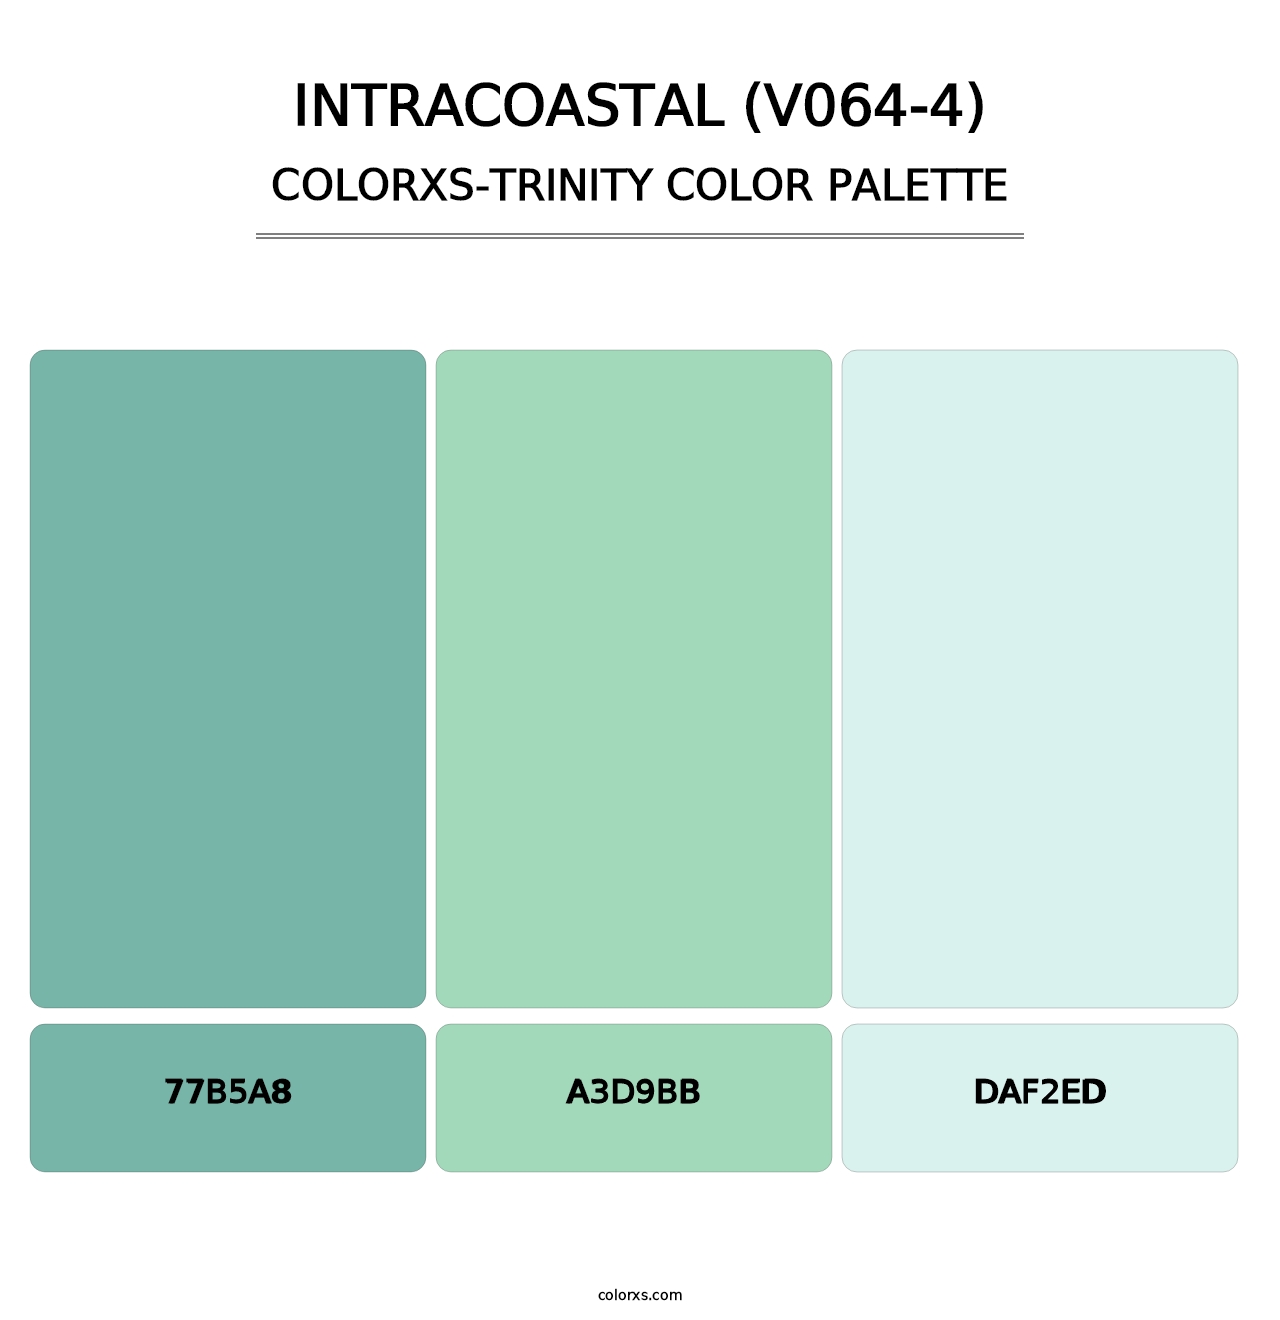 Intracoastal (V064-4) - Colorxs Trinity Palette